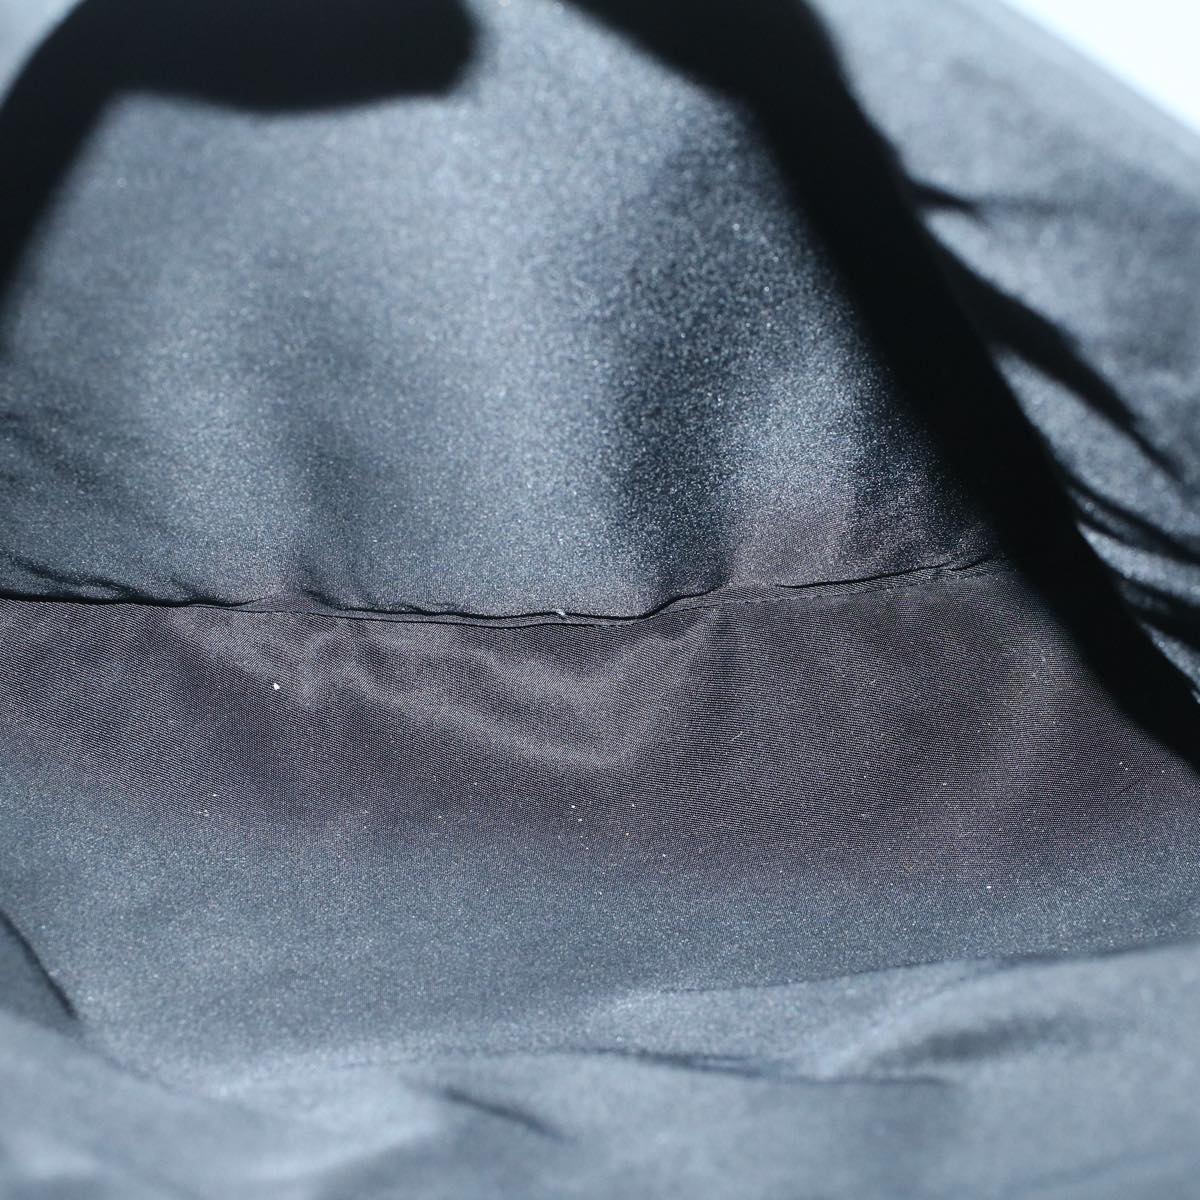 PRADA Tote Bag Nylon Black Auth 60403